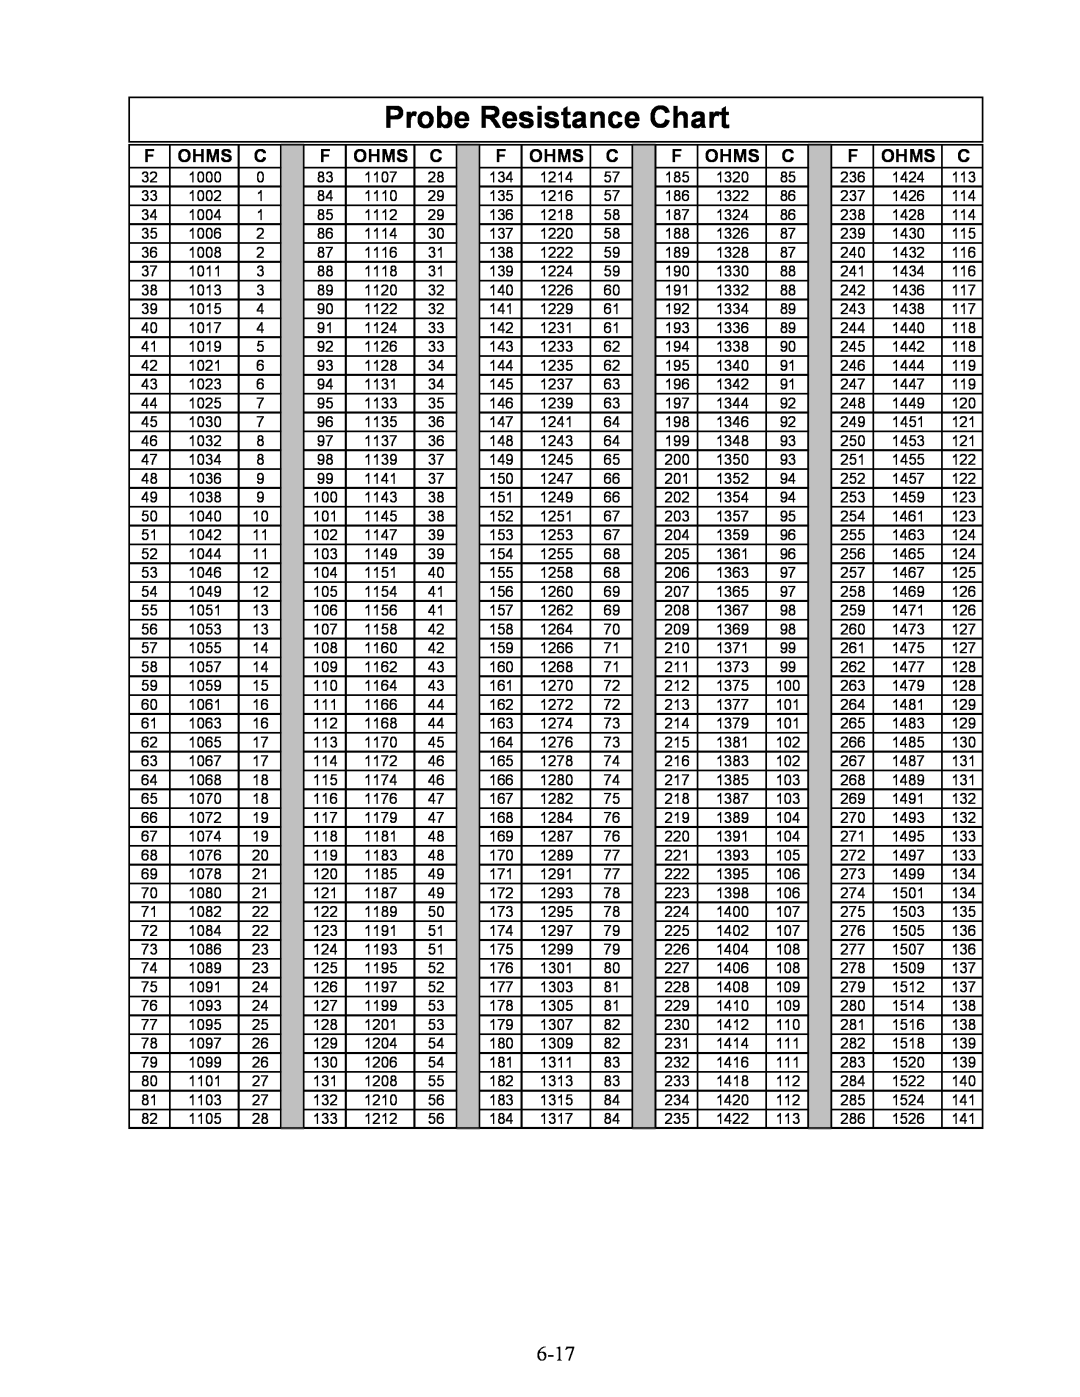 Frymaster FBCR18, FBKR18 Series manual Probe Resistance Chart, Ohms 